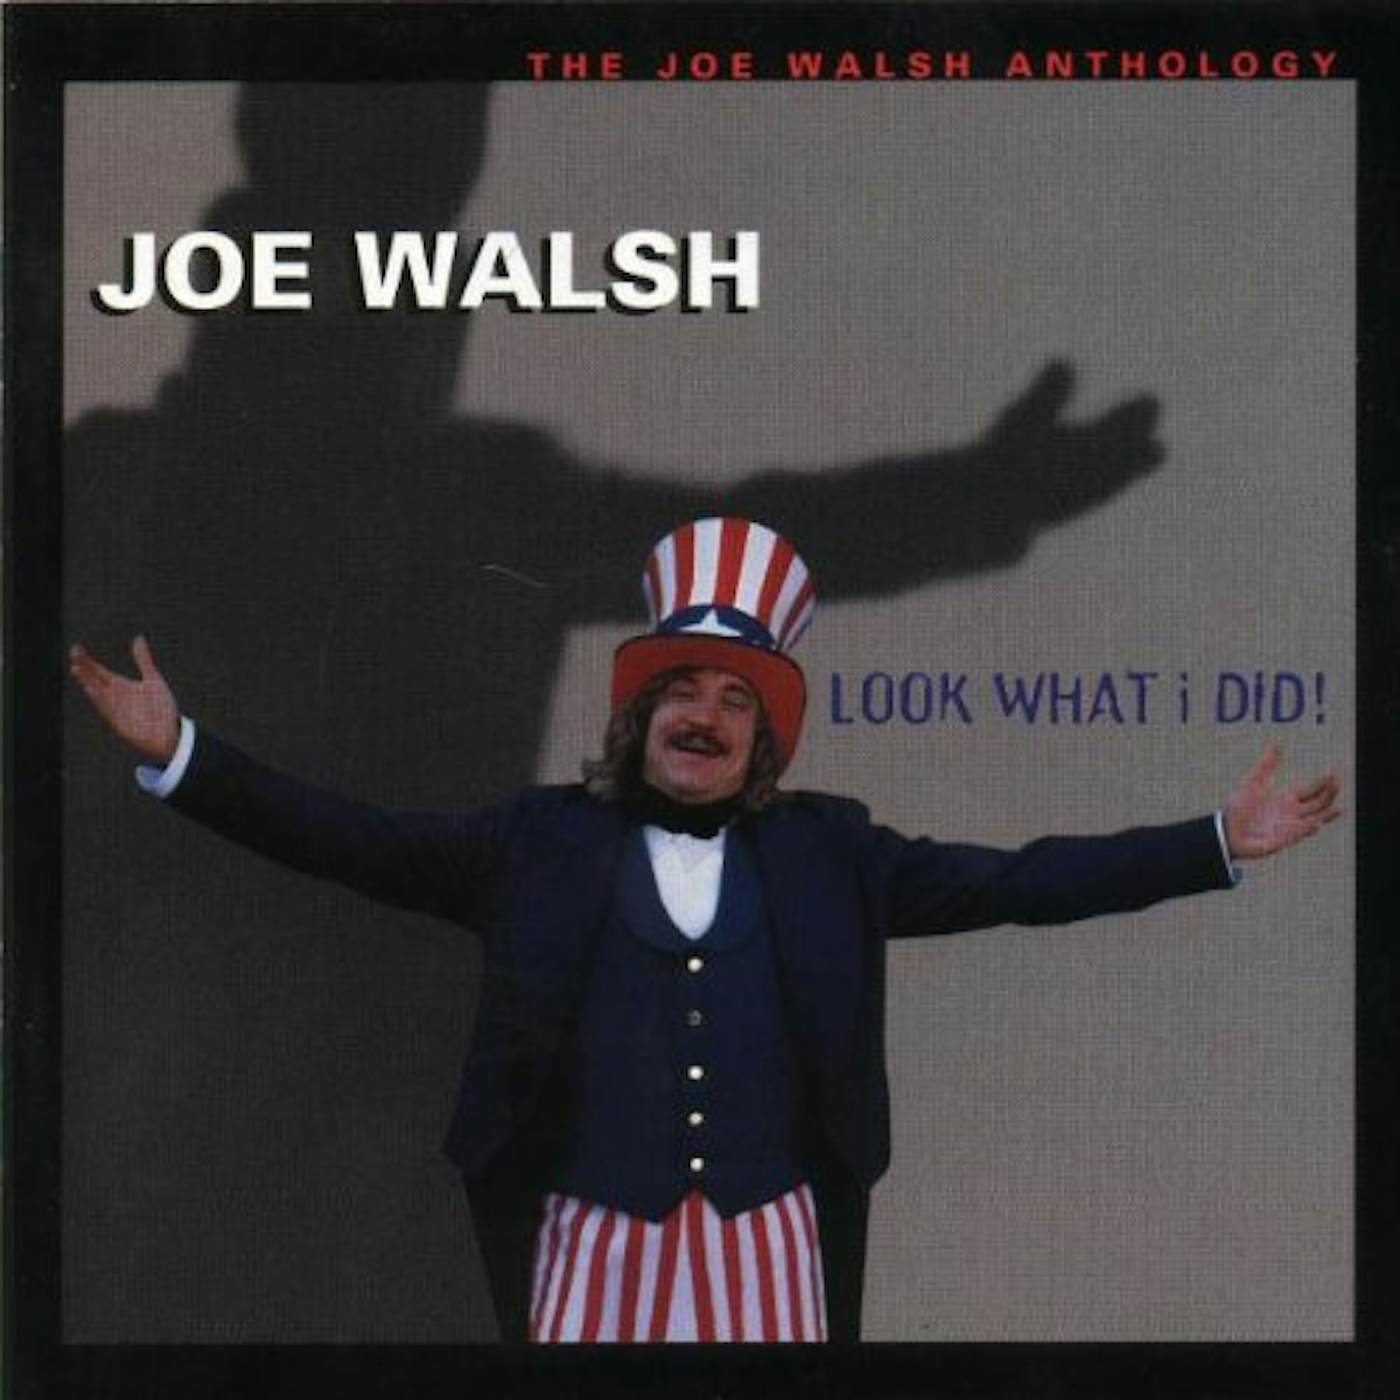 Joe Walsh LOOK WHAT I DID (ANTHOLOGY) CD